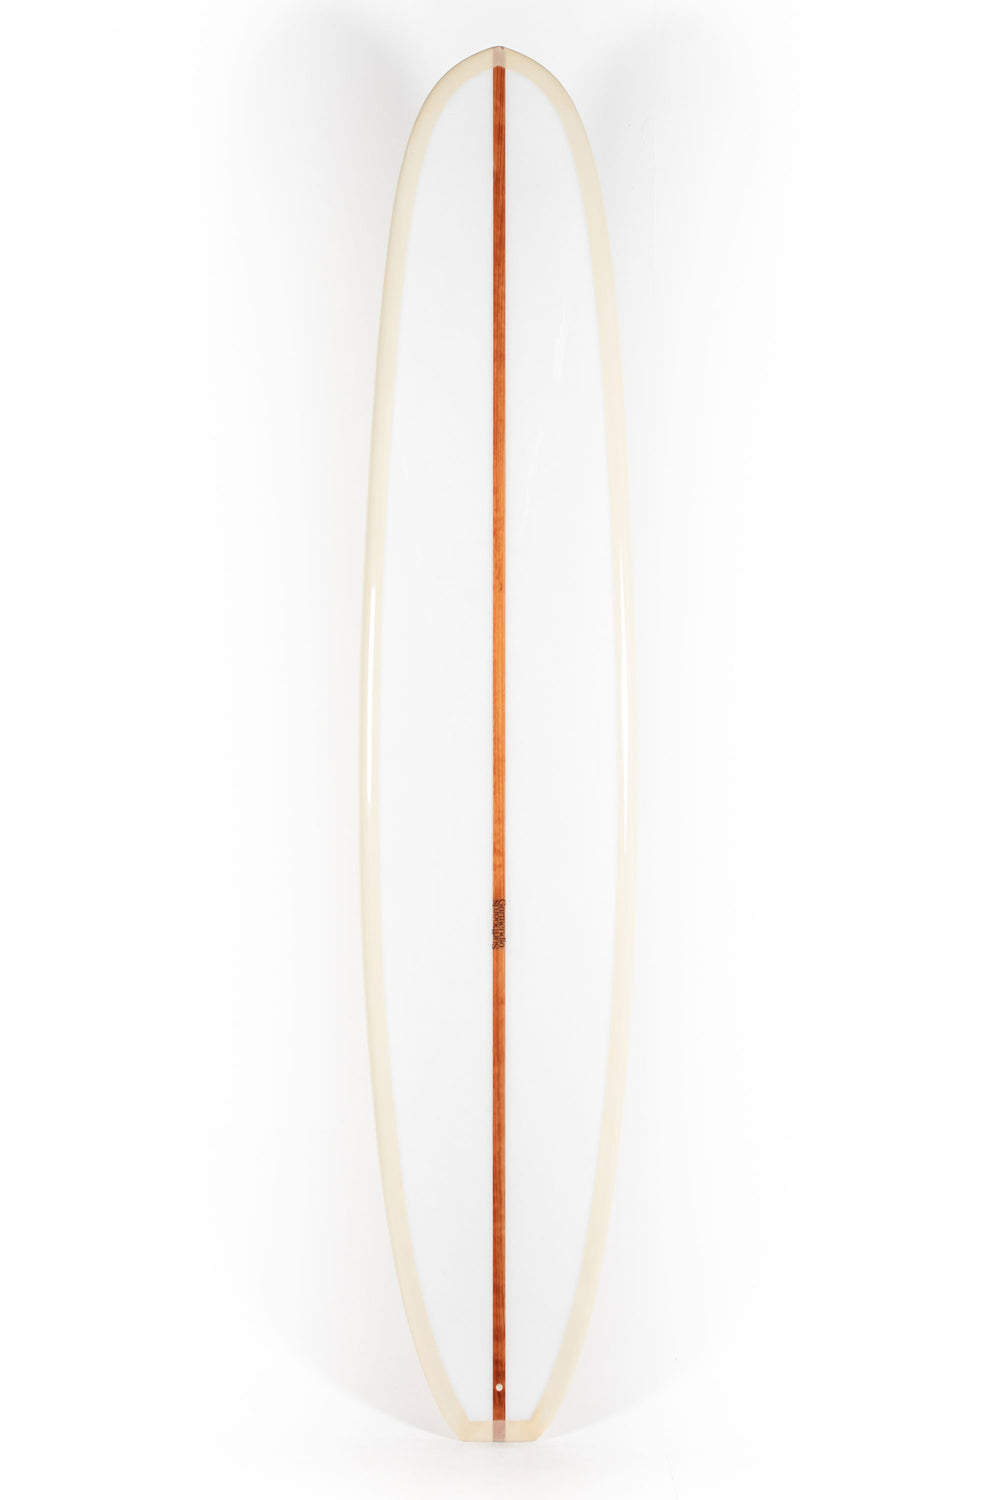 Pukas Surf Shop - Garmendia Surfboards - BULLET - 9'6